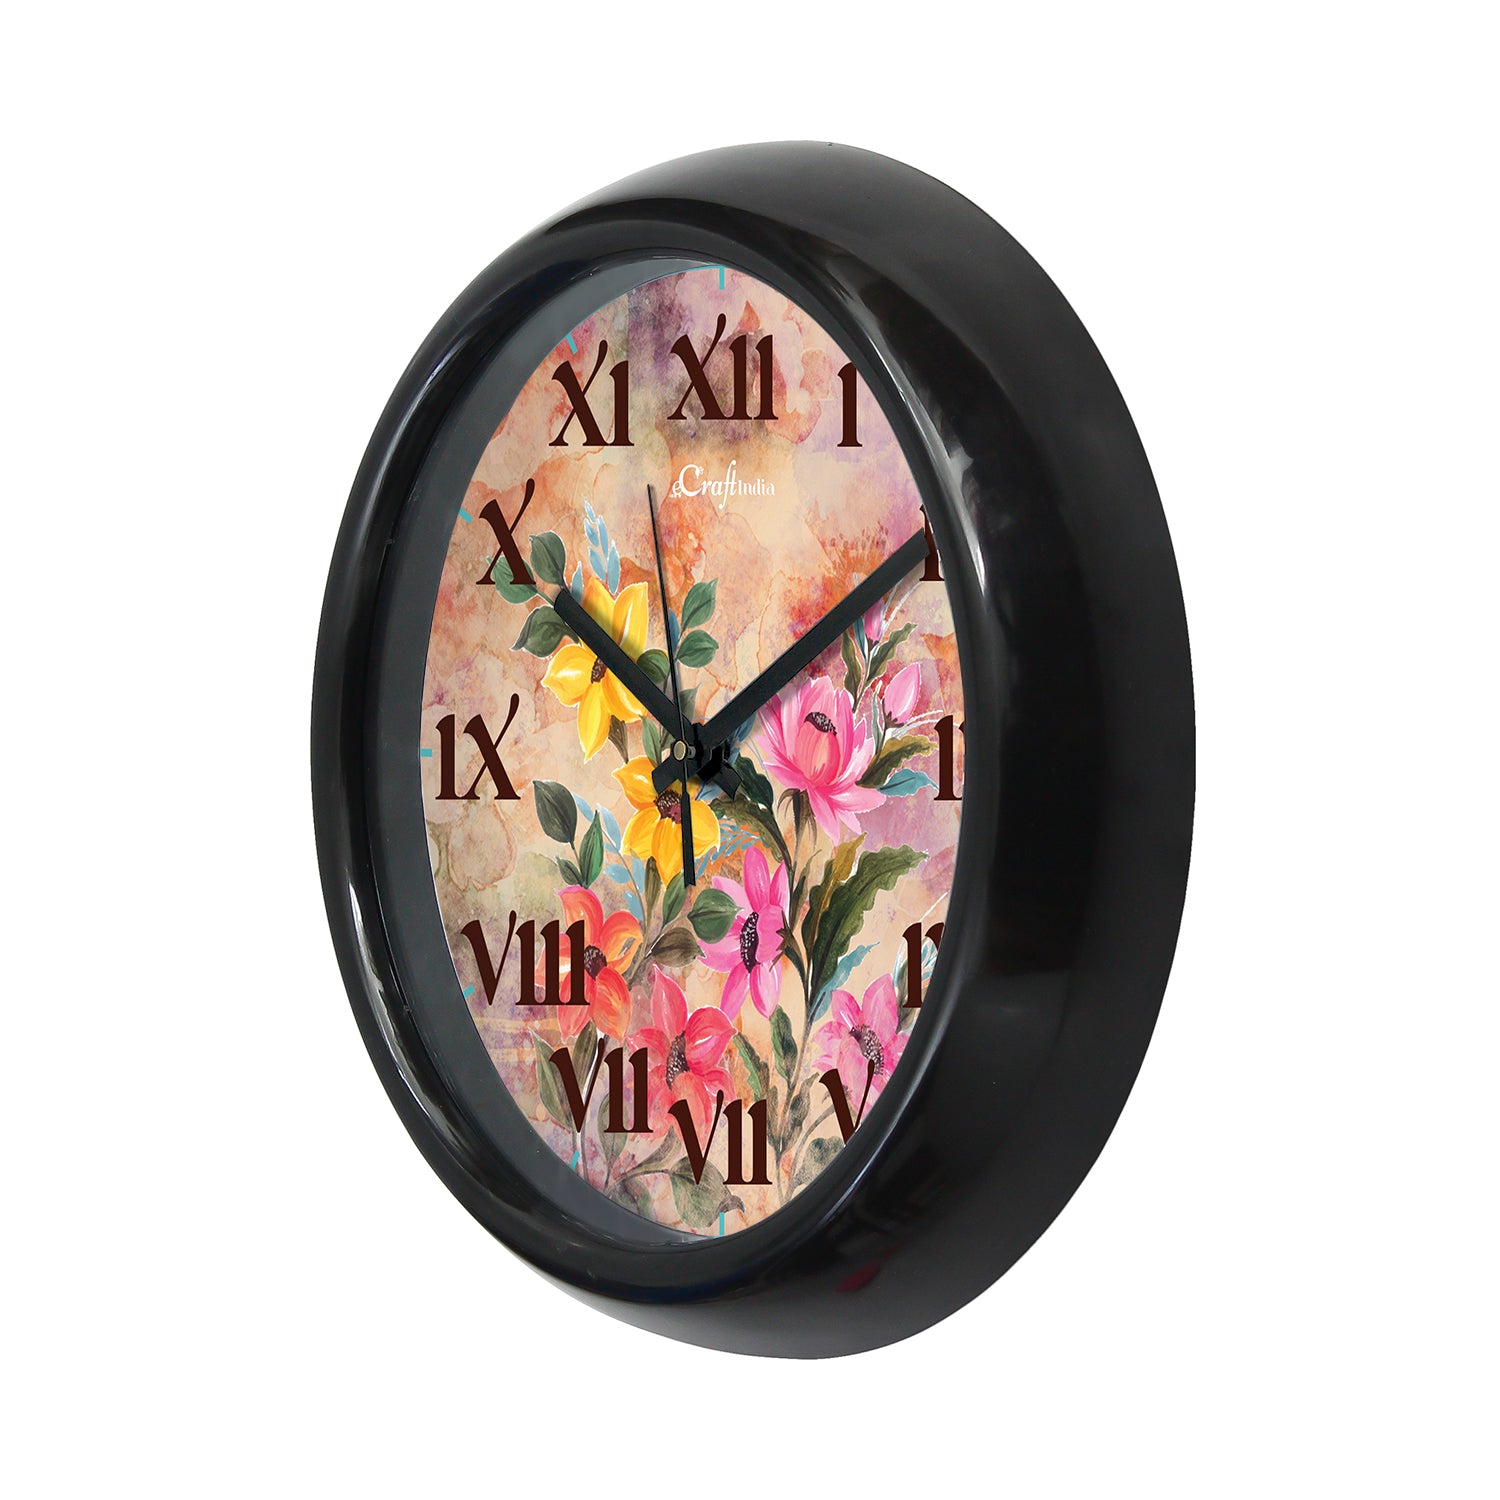 "Flower Theme" Multicolor Designer Round Analog Black Wall Clock 4